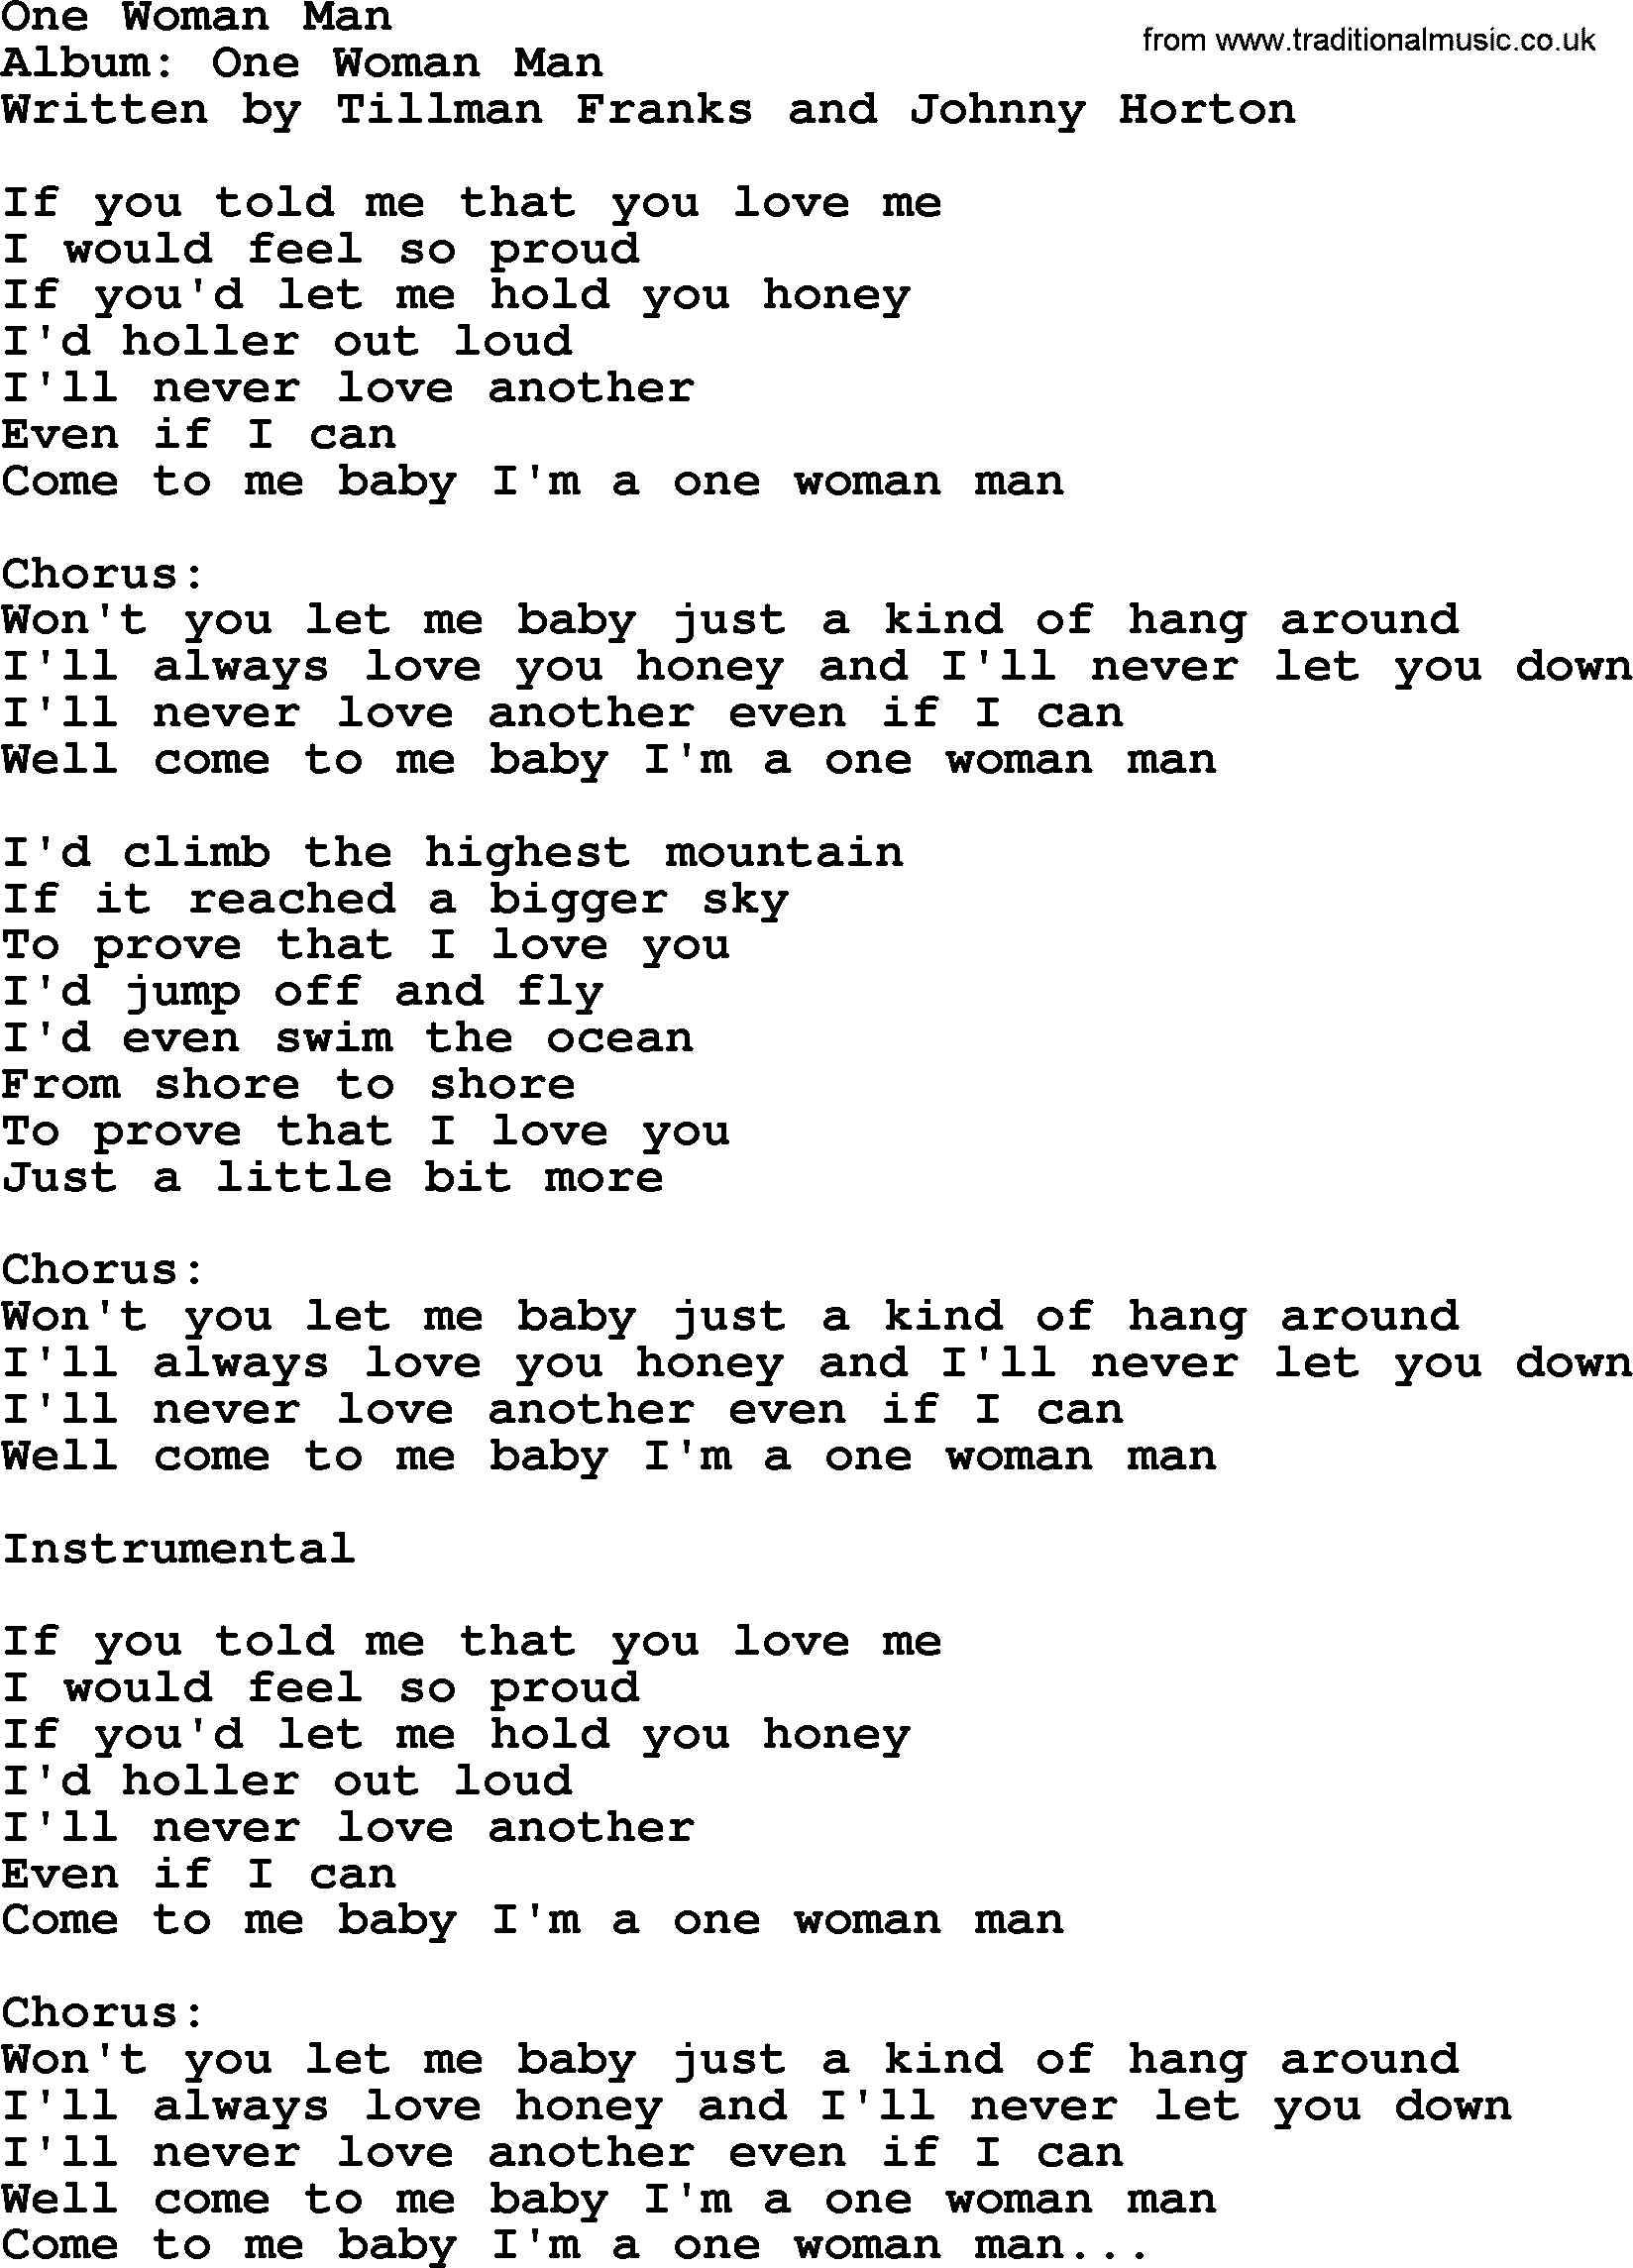 George Jones song: One Woman Man, lyrics